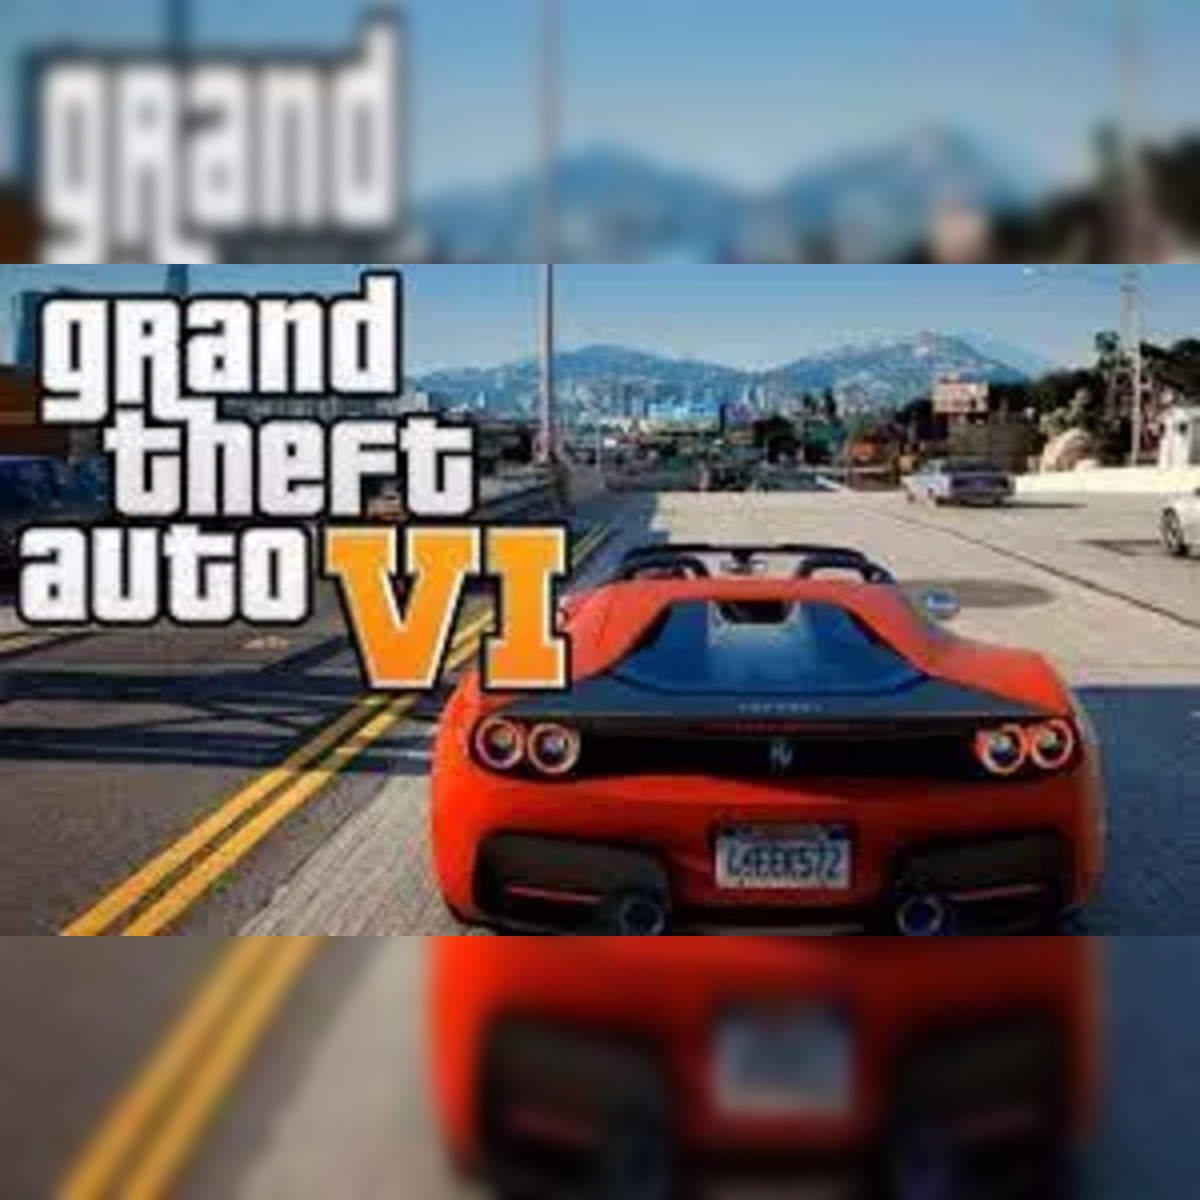 gta 6 release date: GTA 6, Grand Theft Auto 6 trailer, release